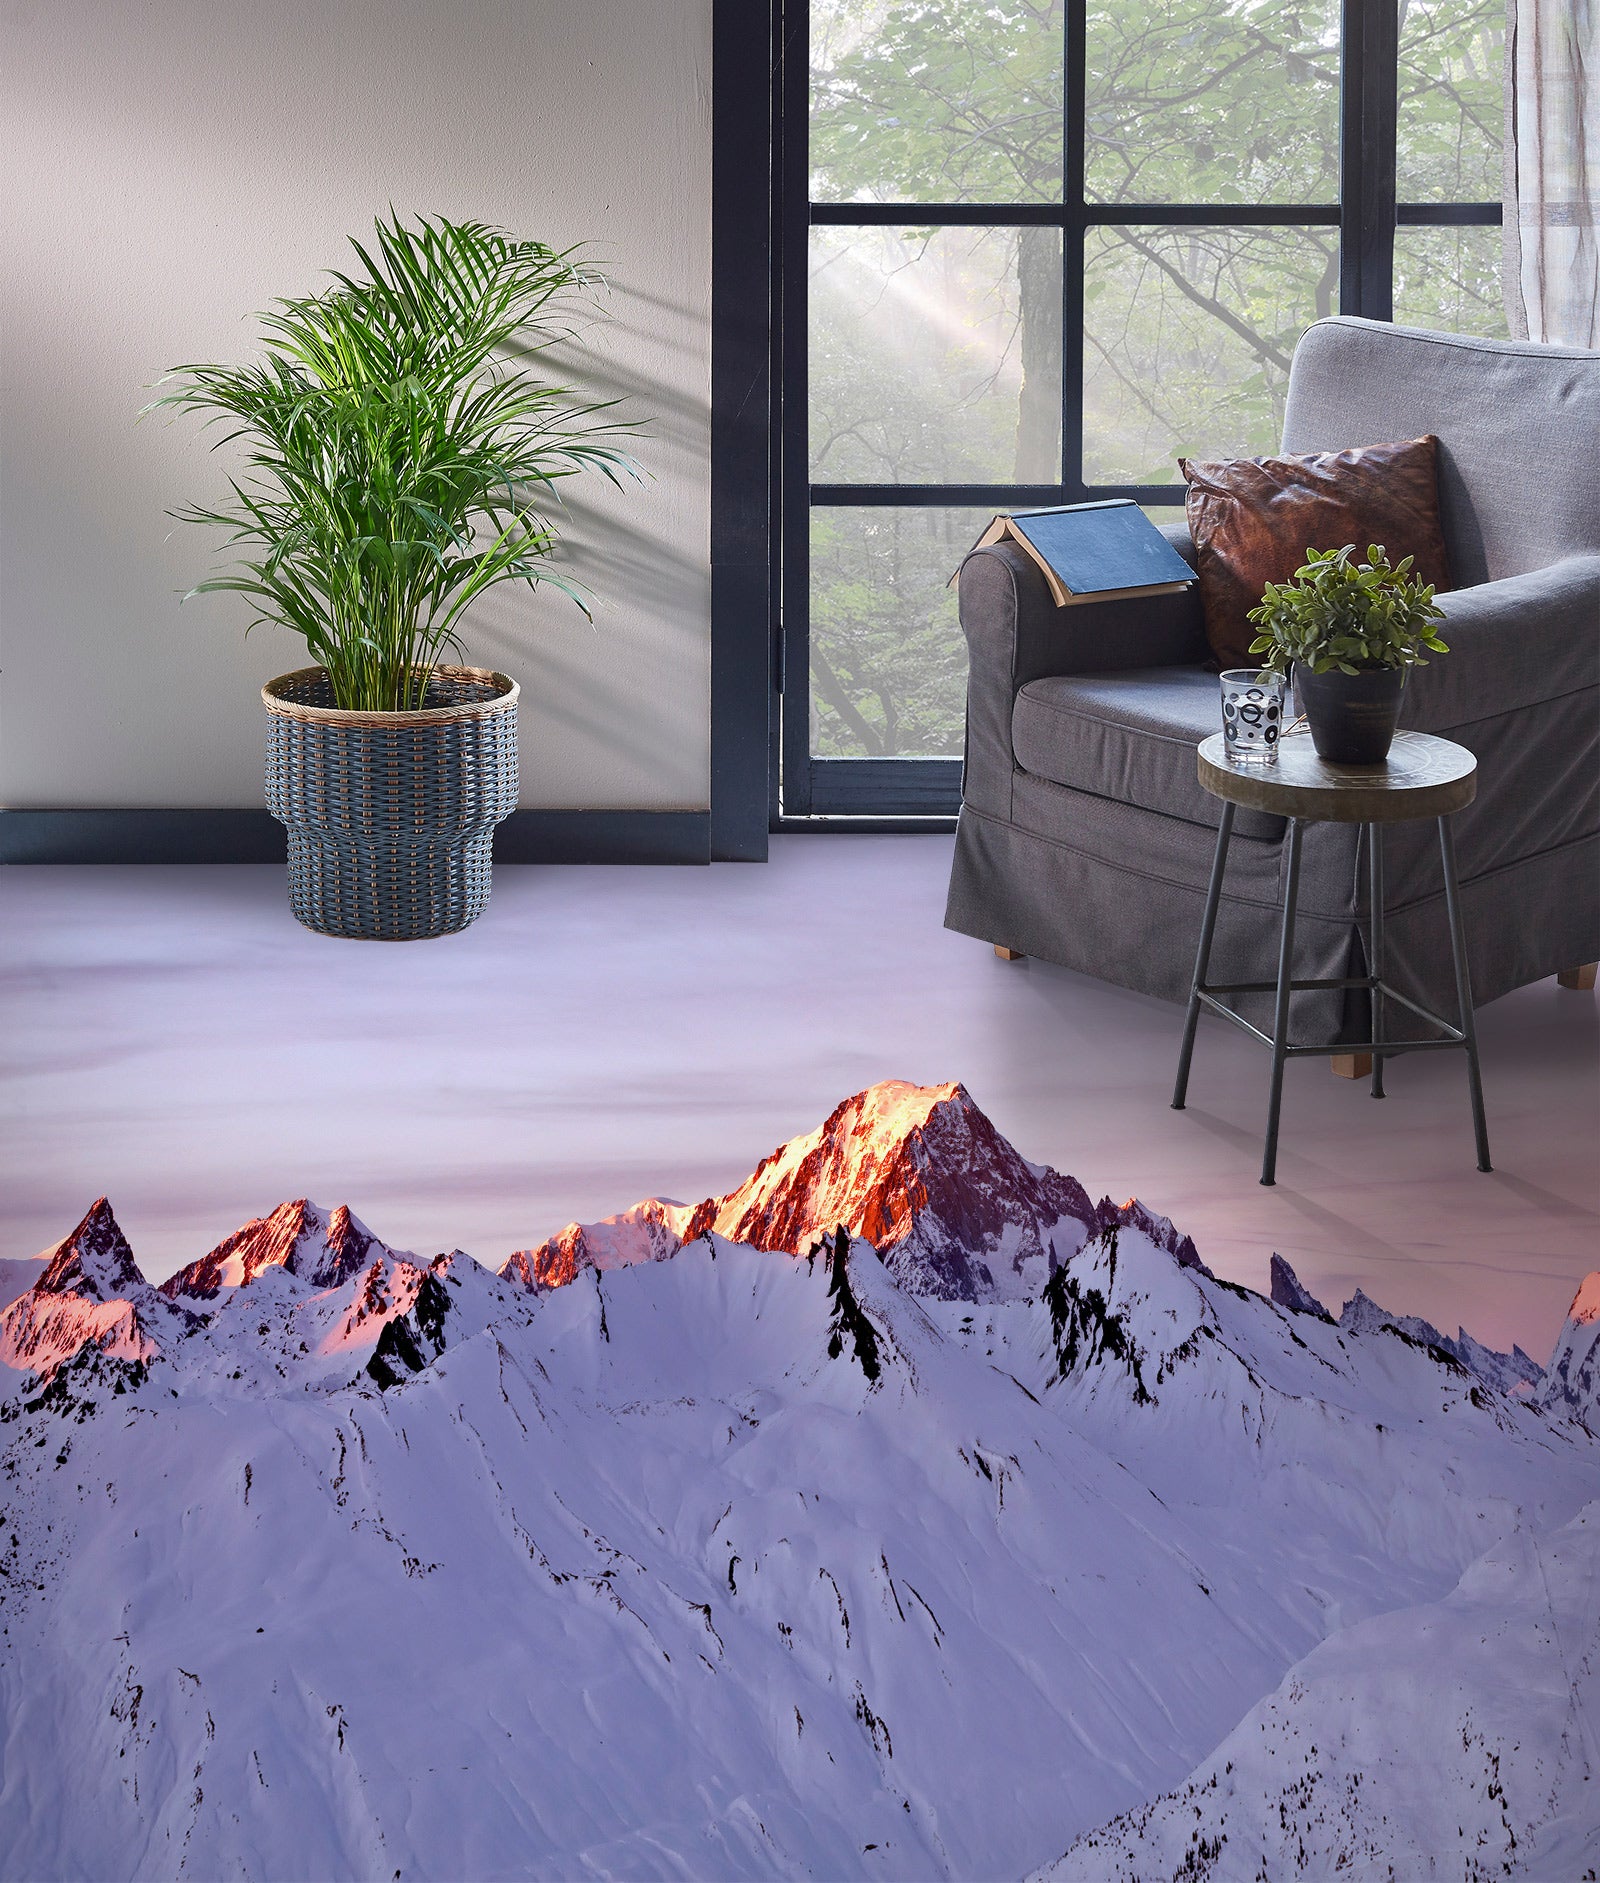 3D Sunset Snow Mountain 537 Assaf Frank Floor Mural  Wallpaper Murals Self-Adhesive Removable Print Epoxy